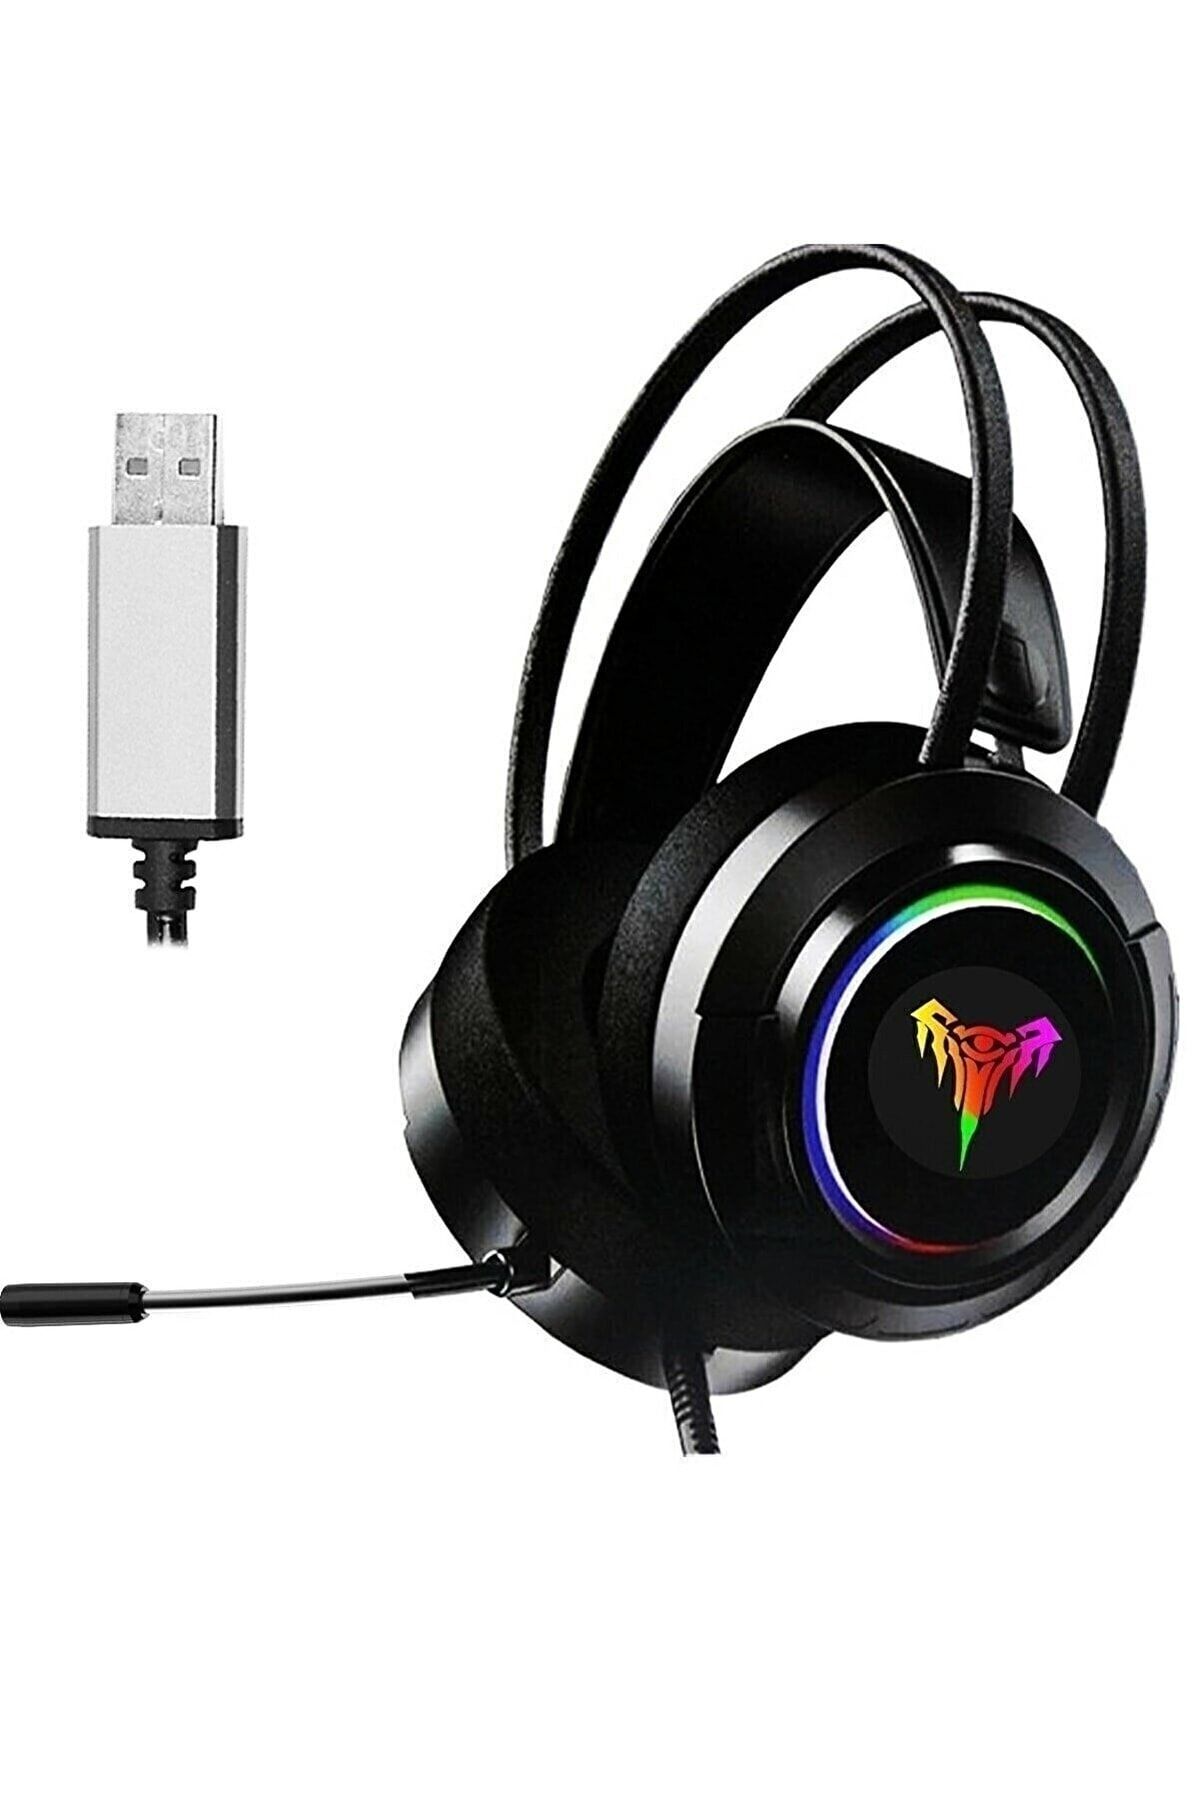 VİPONLİNE Profesyonel Headset Pro 7.1 Usb Rgb Gaming Oyuncu Kulaklığı